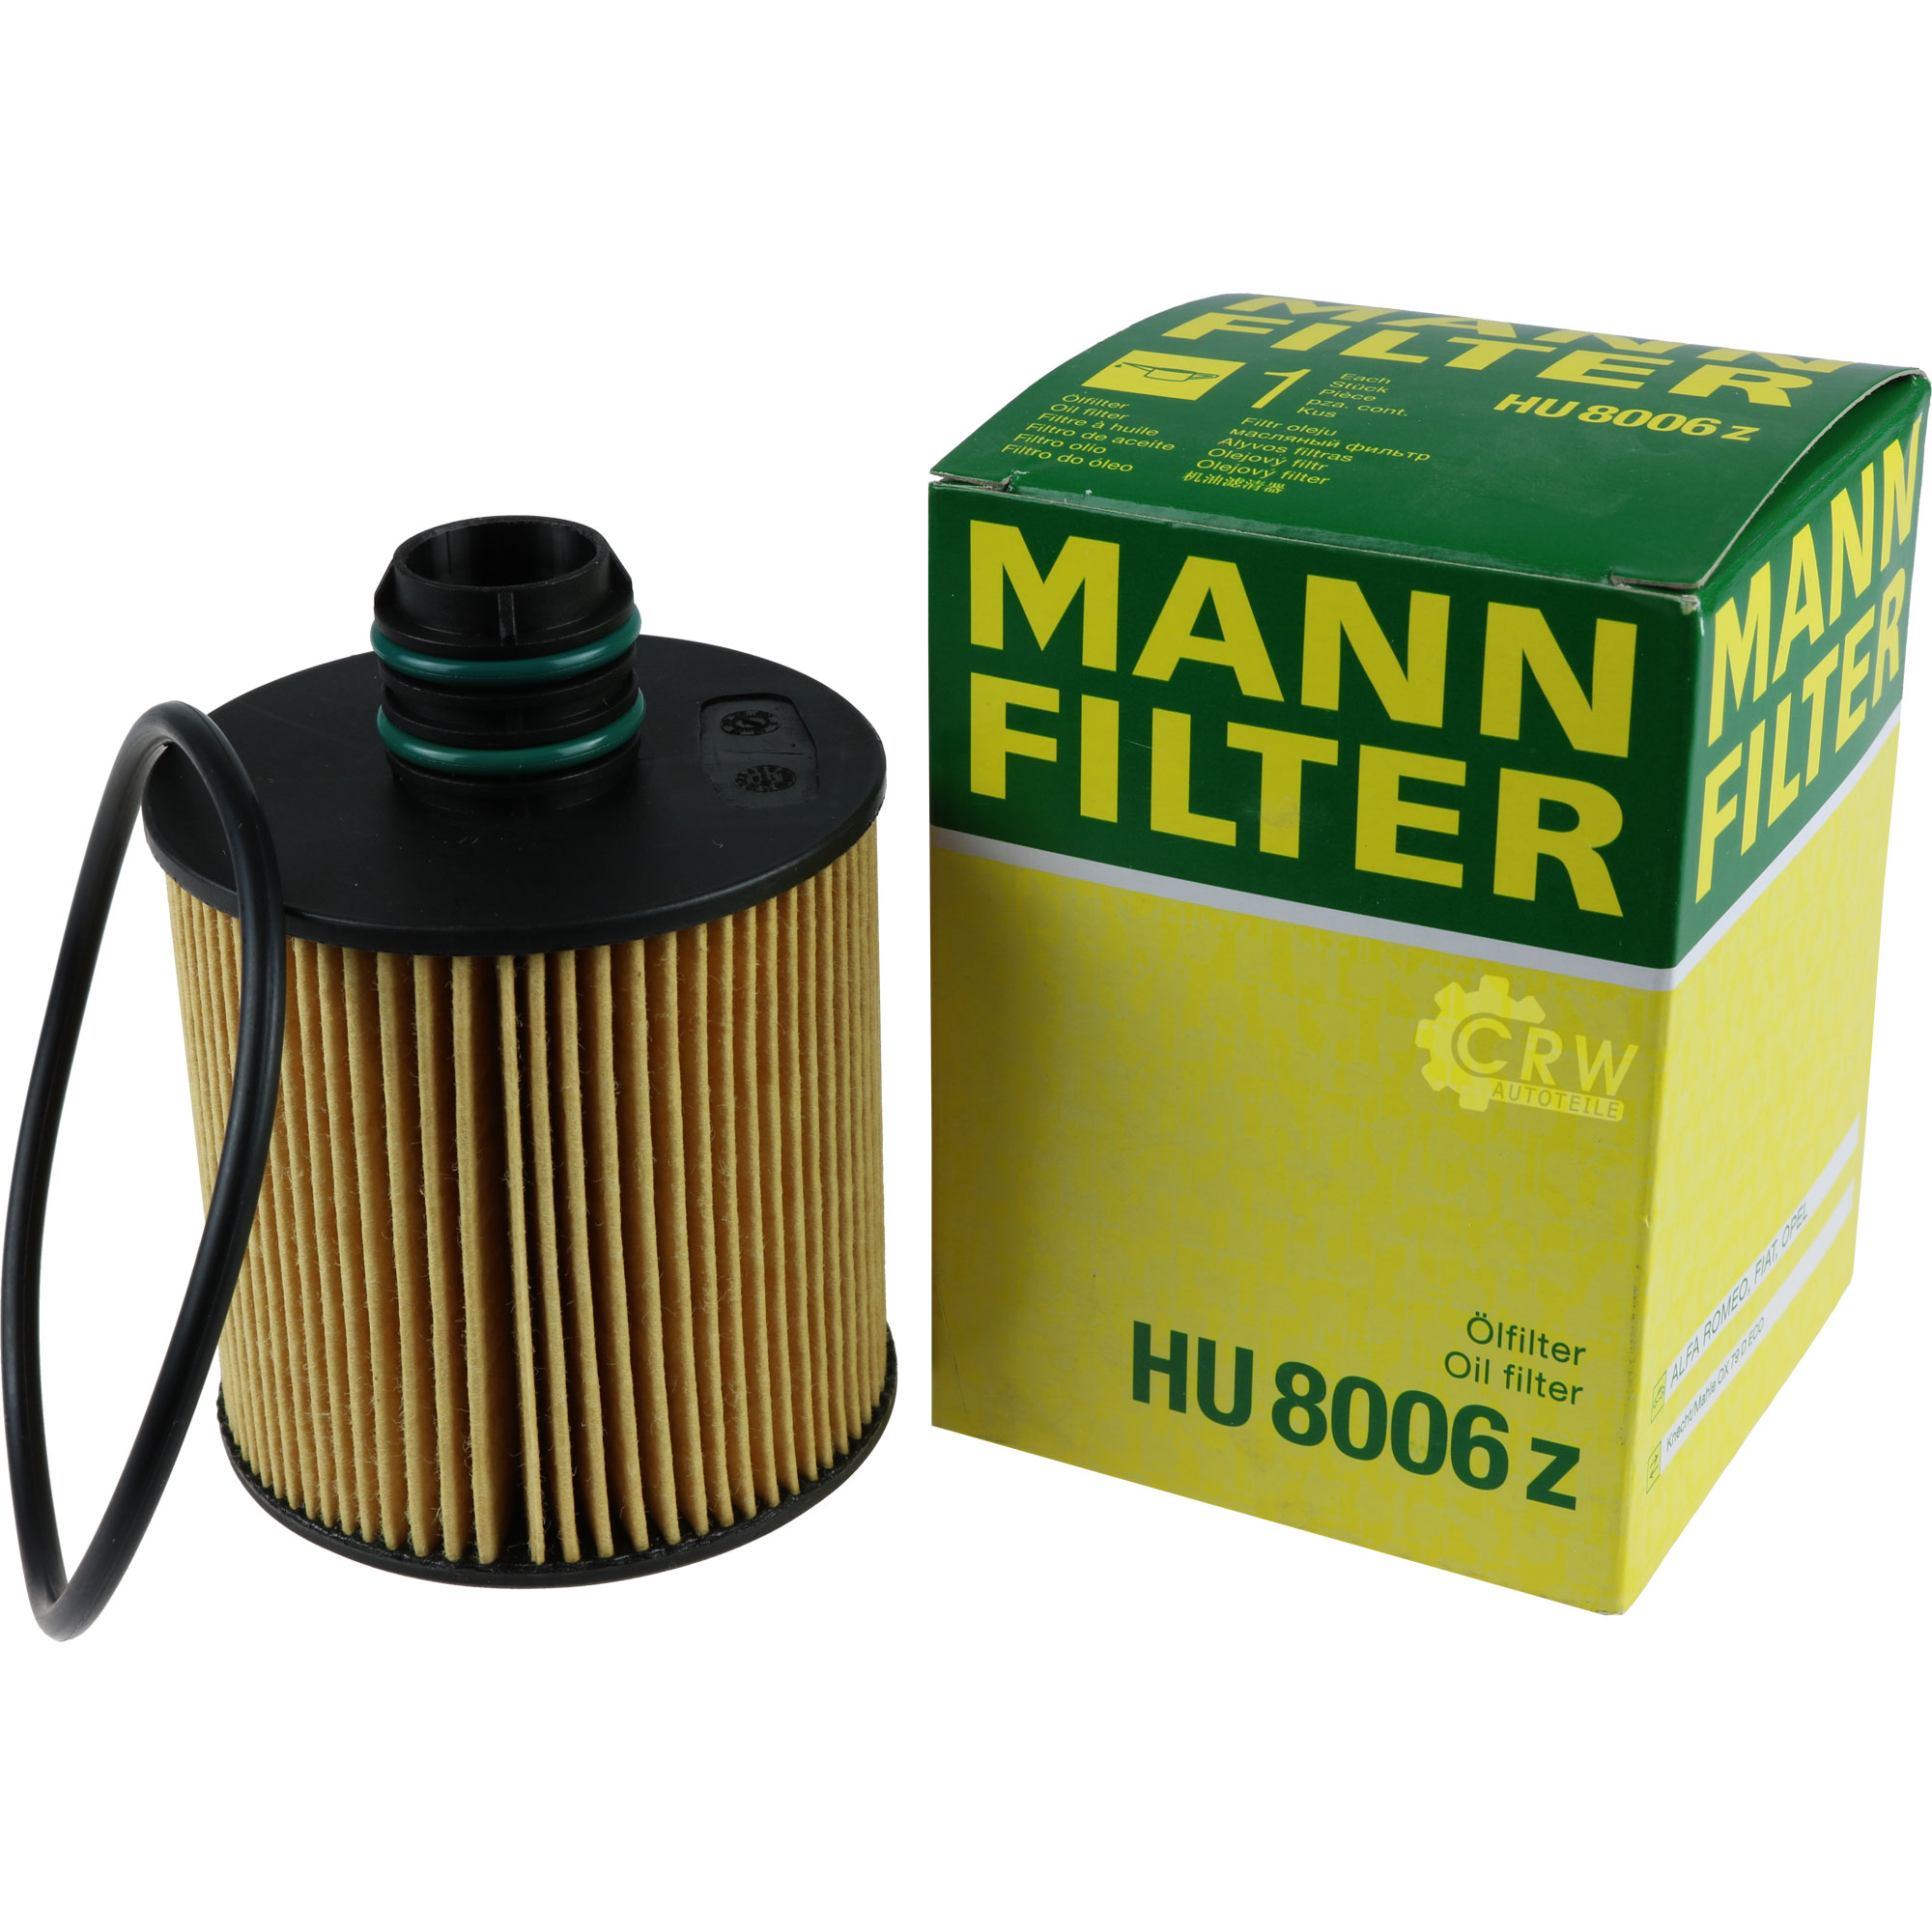 MANN-FILTER Ölfilter HU 8006 z Oil Filter